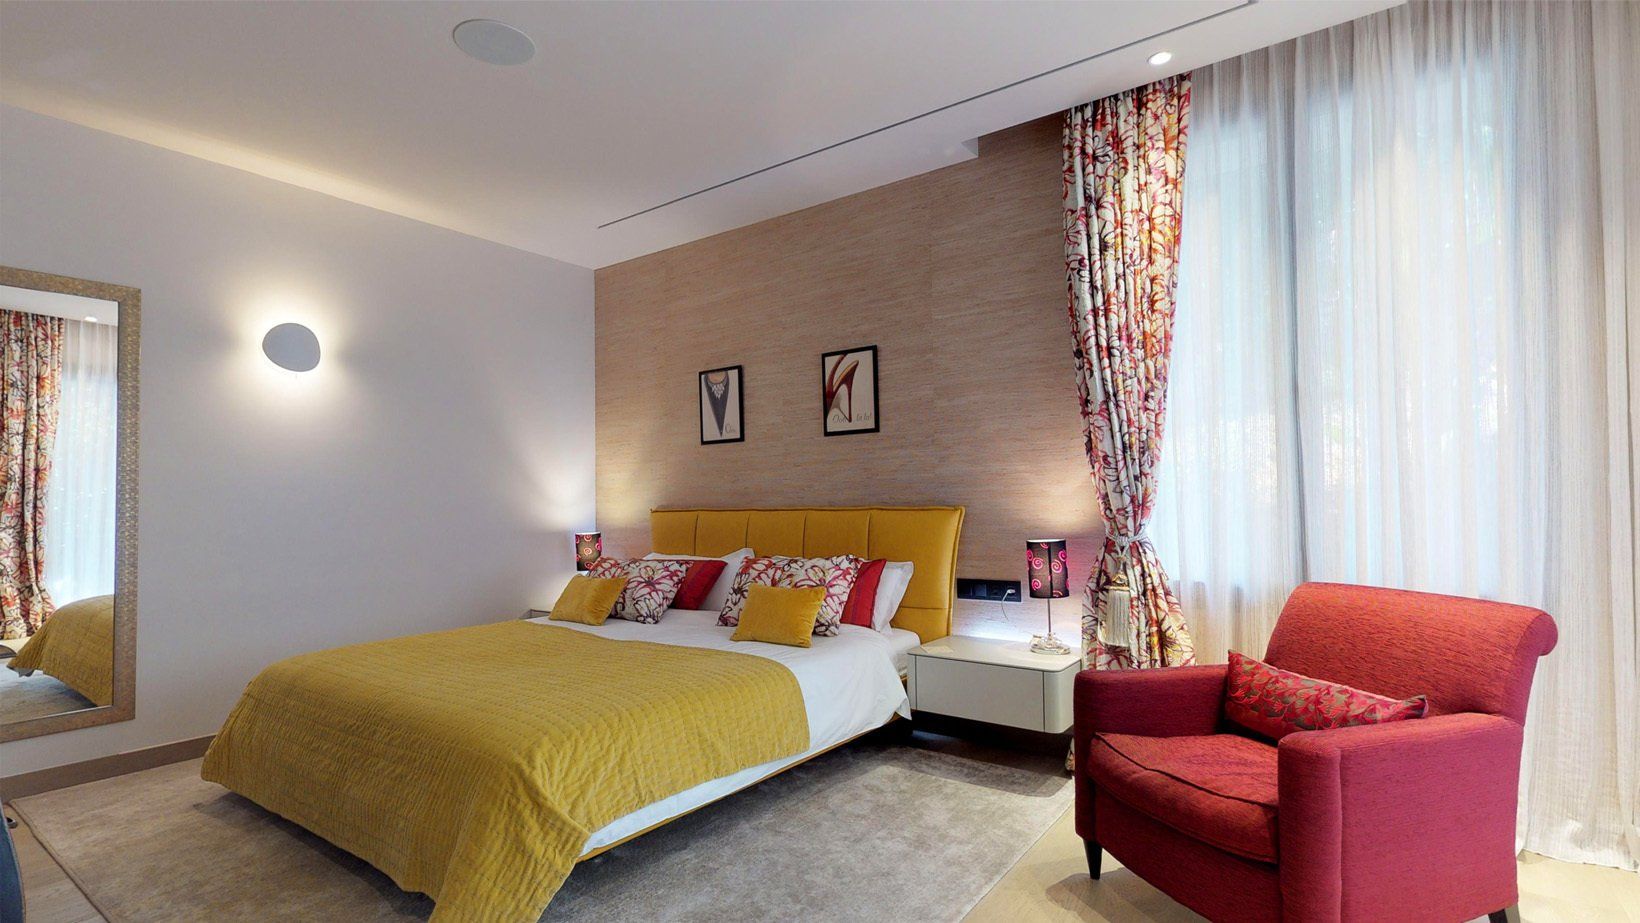 interior design project in La Zagaleta Marbella Spain - image of yellow bedroom